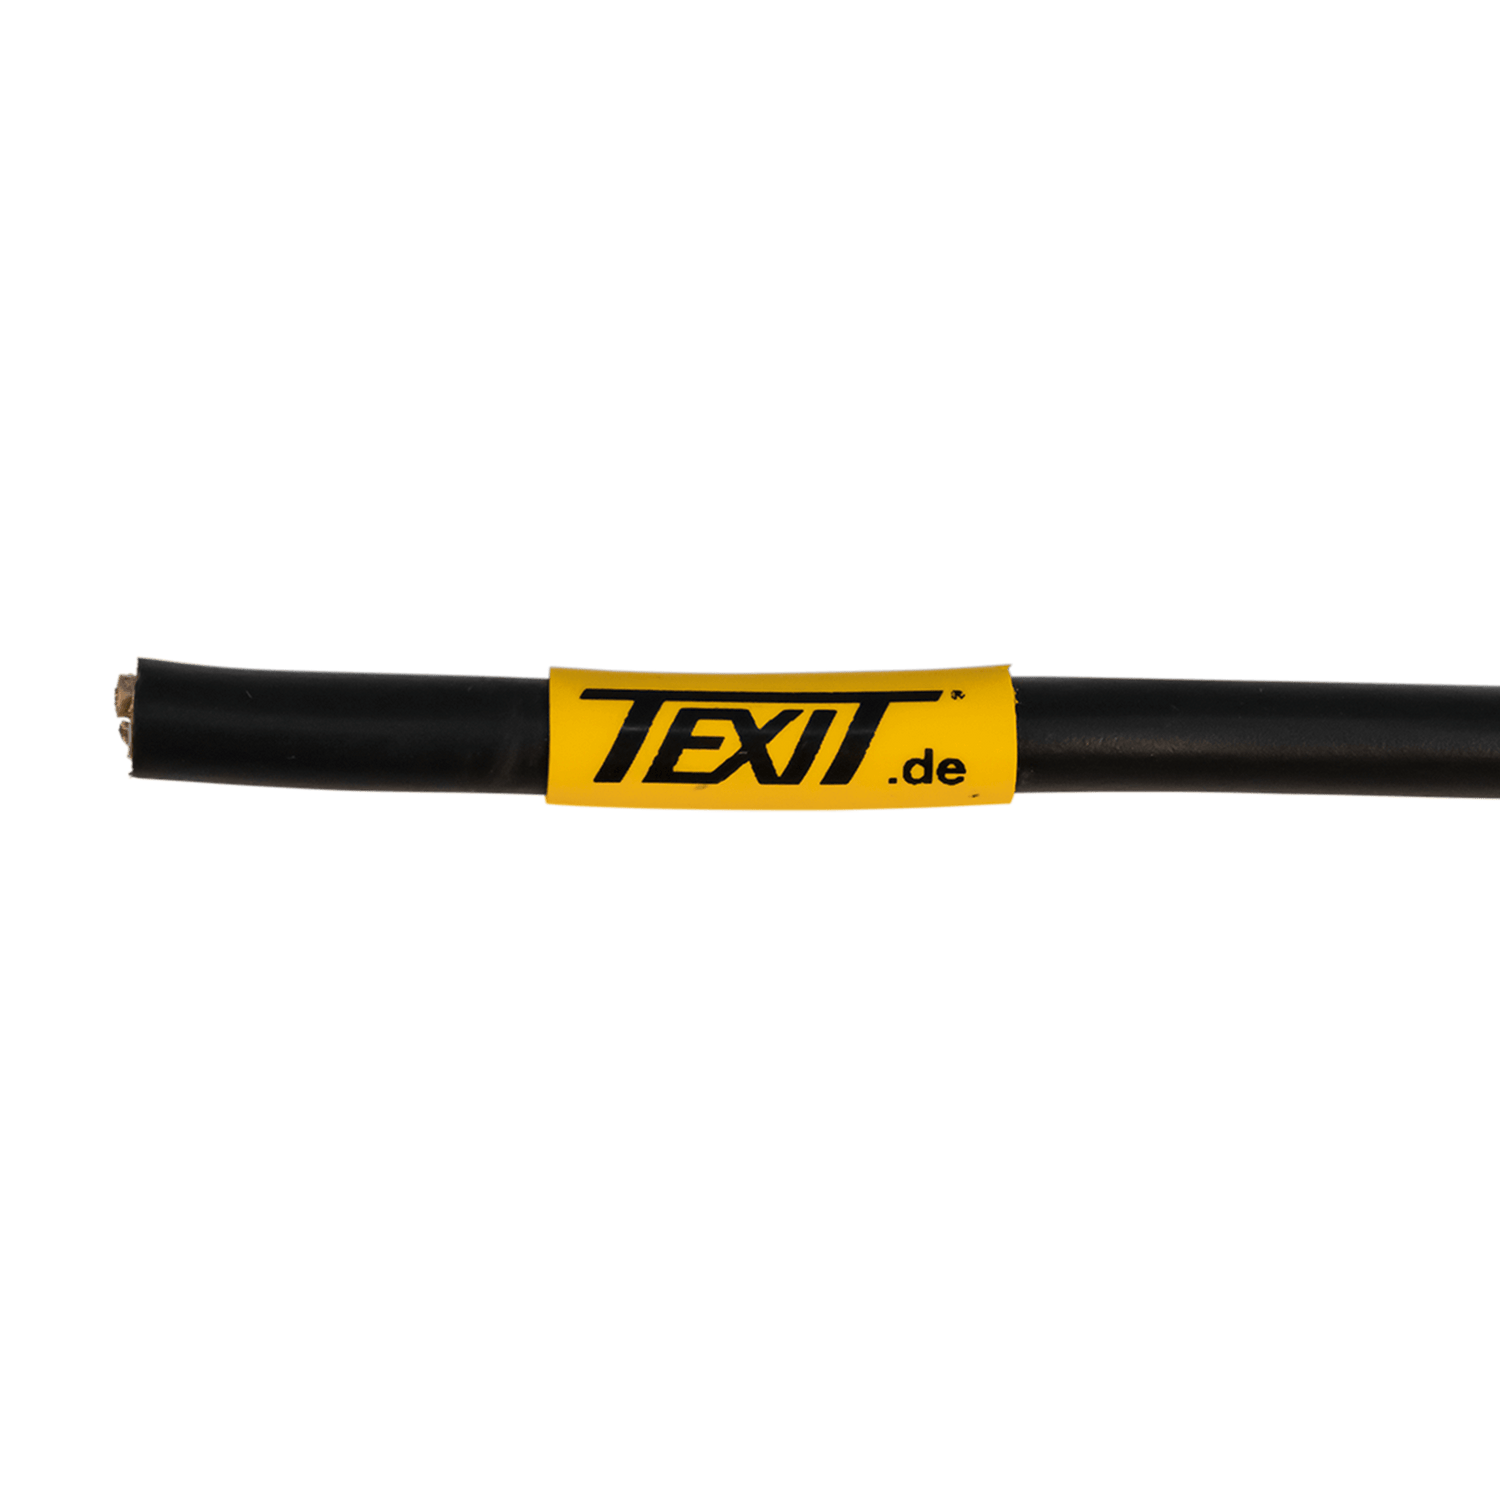 HTX-TD0 Heat shrink marker, assembled, on heat shrink tubing